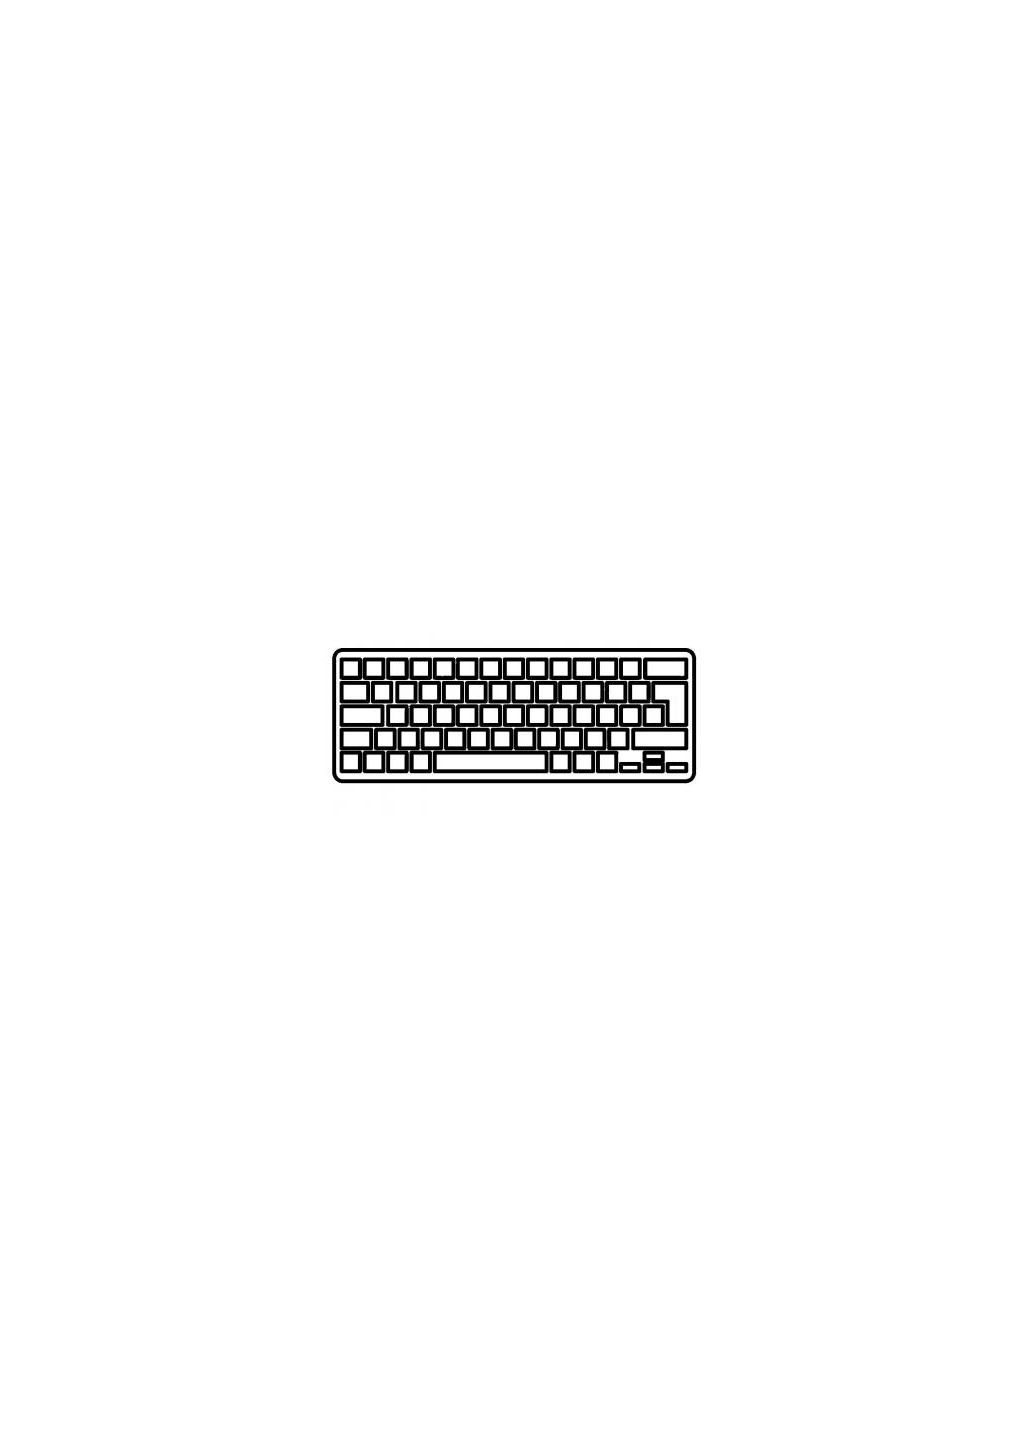 Клавиатура ноутбука A (A43629) Acer aspire 4210/4310/4320/4510/4520/4710/4720 черная u (276706591)